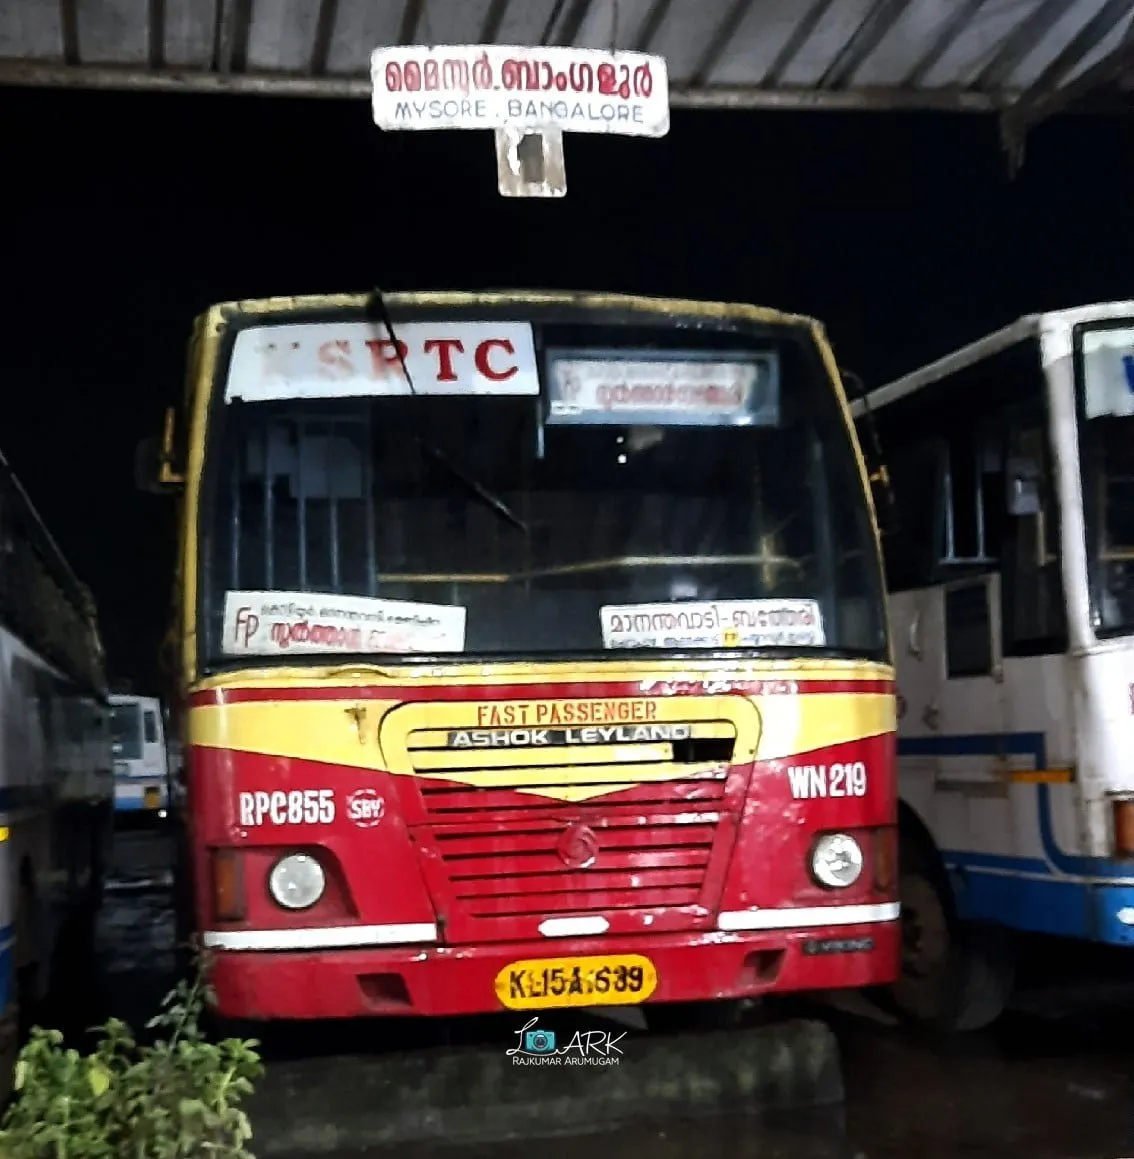 KSRTC RPC 855 Sulthan Bathery - Balal Bus Timings